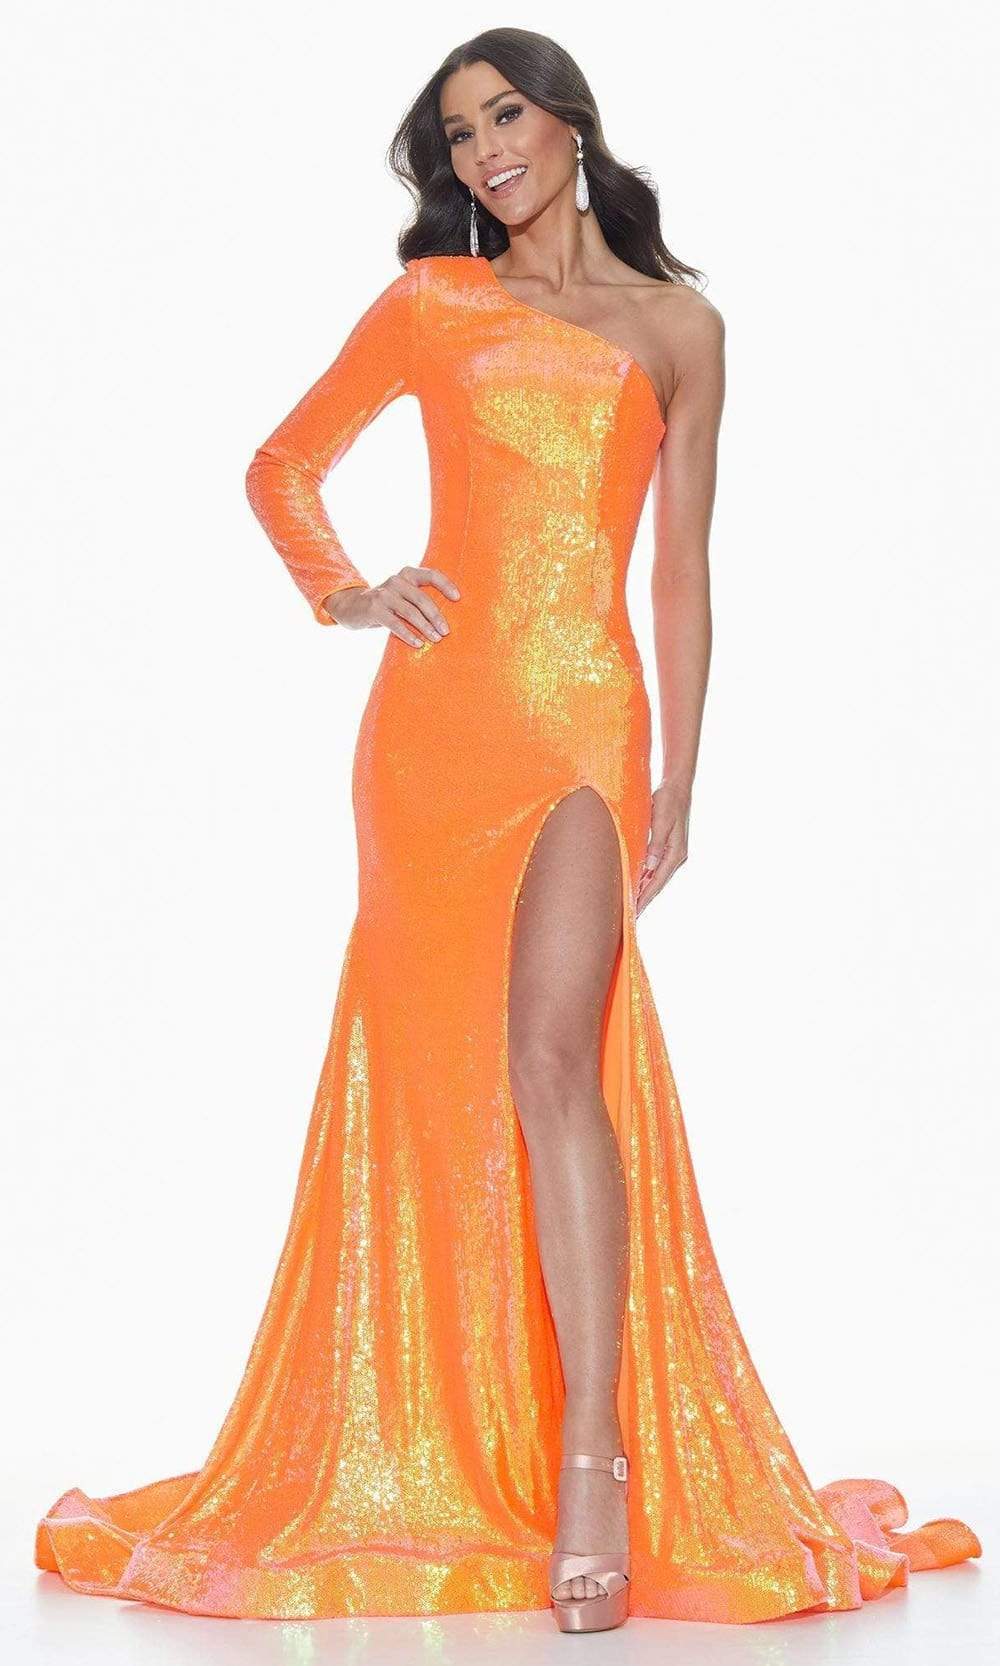 Ashley Lauren - 11026 Long Sleeve Sequined High Slit Gown Pageant Dresses 0 / Neon Orange